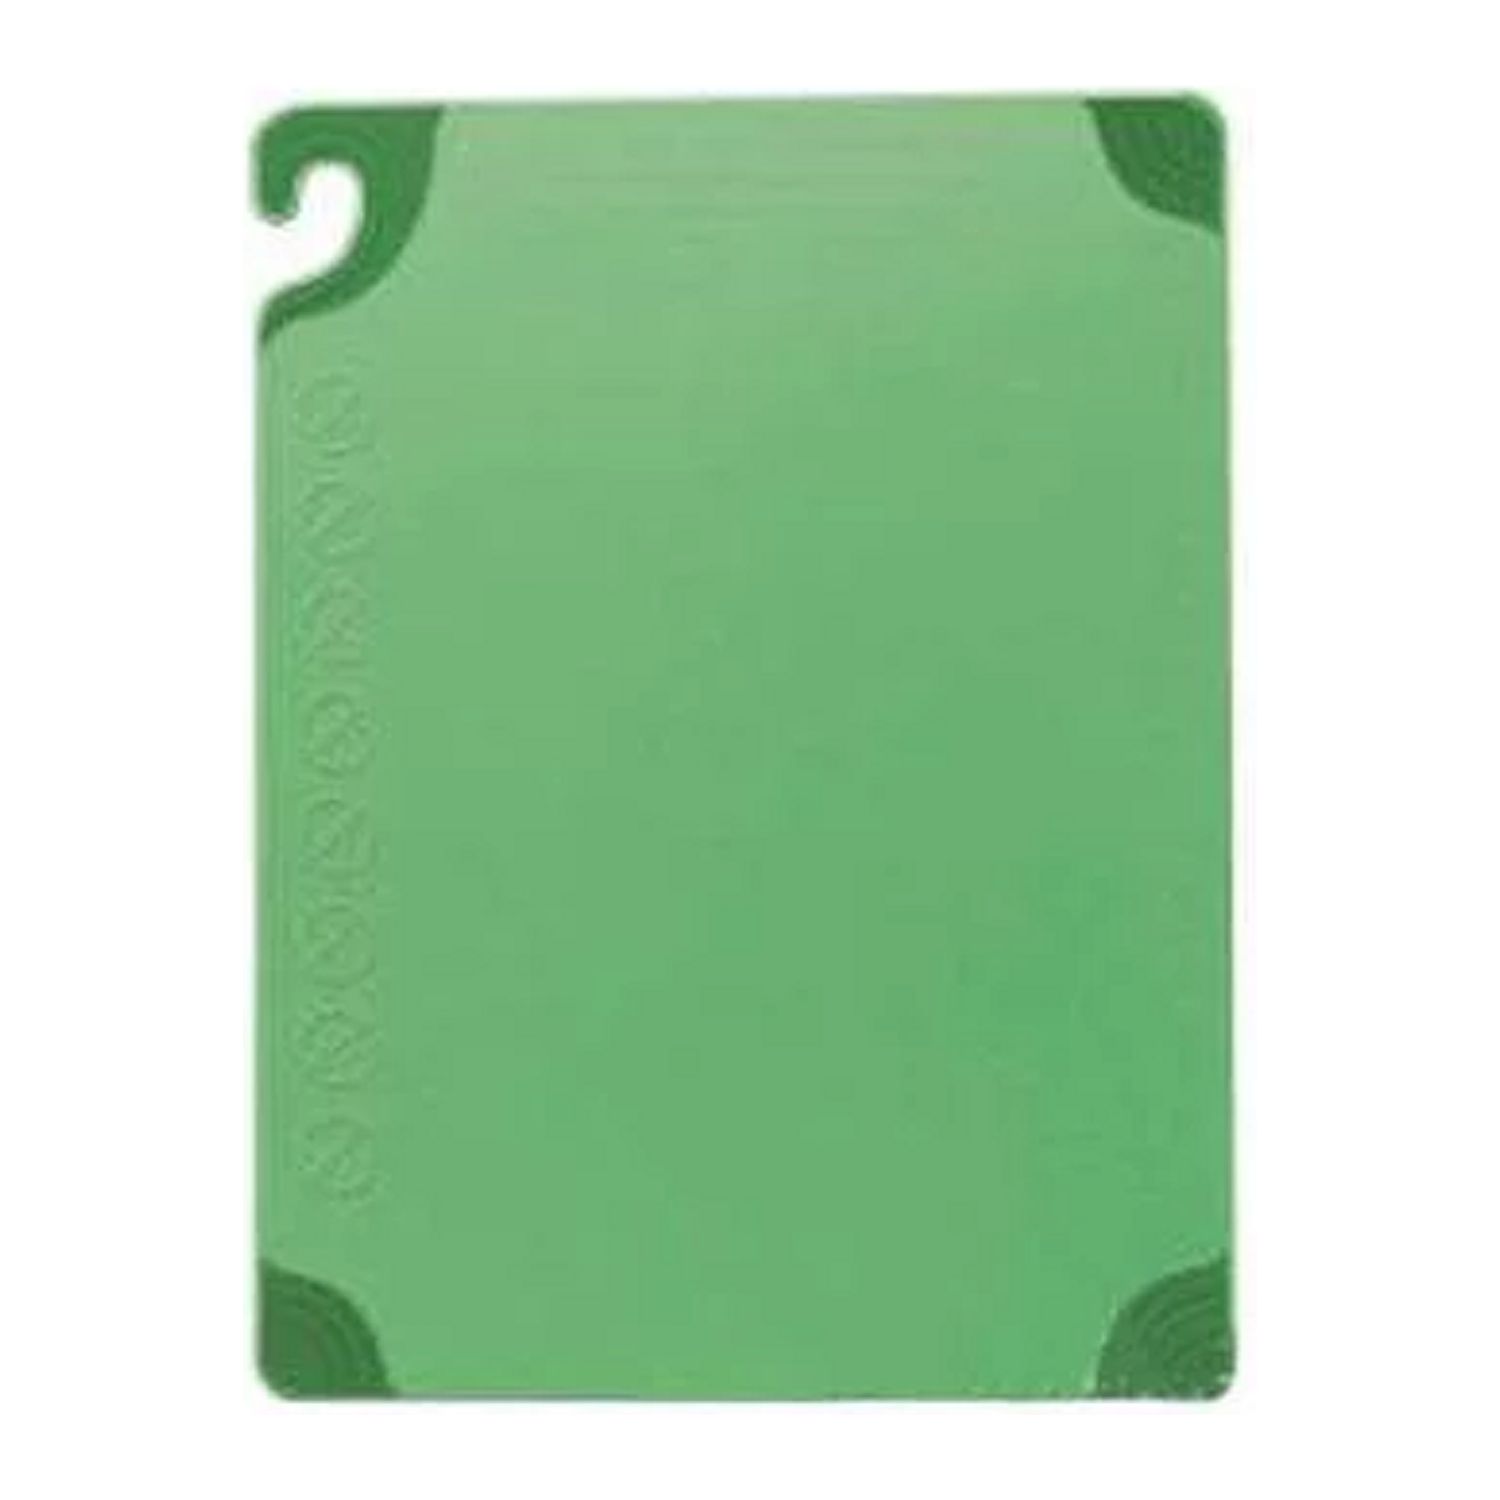 San Jamar CBG182412GNGR Cutting Board, 18x24, Green - image 1 of 2